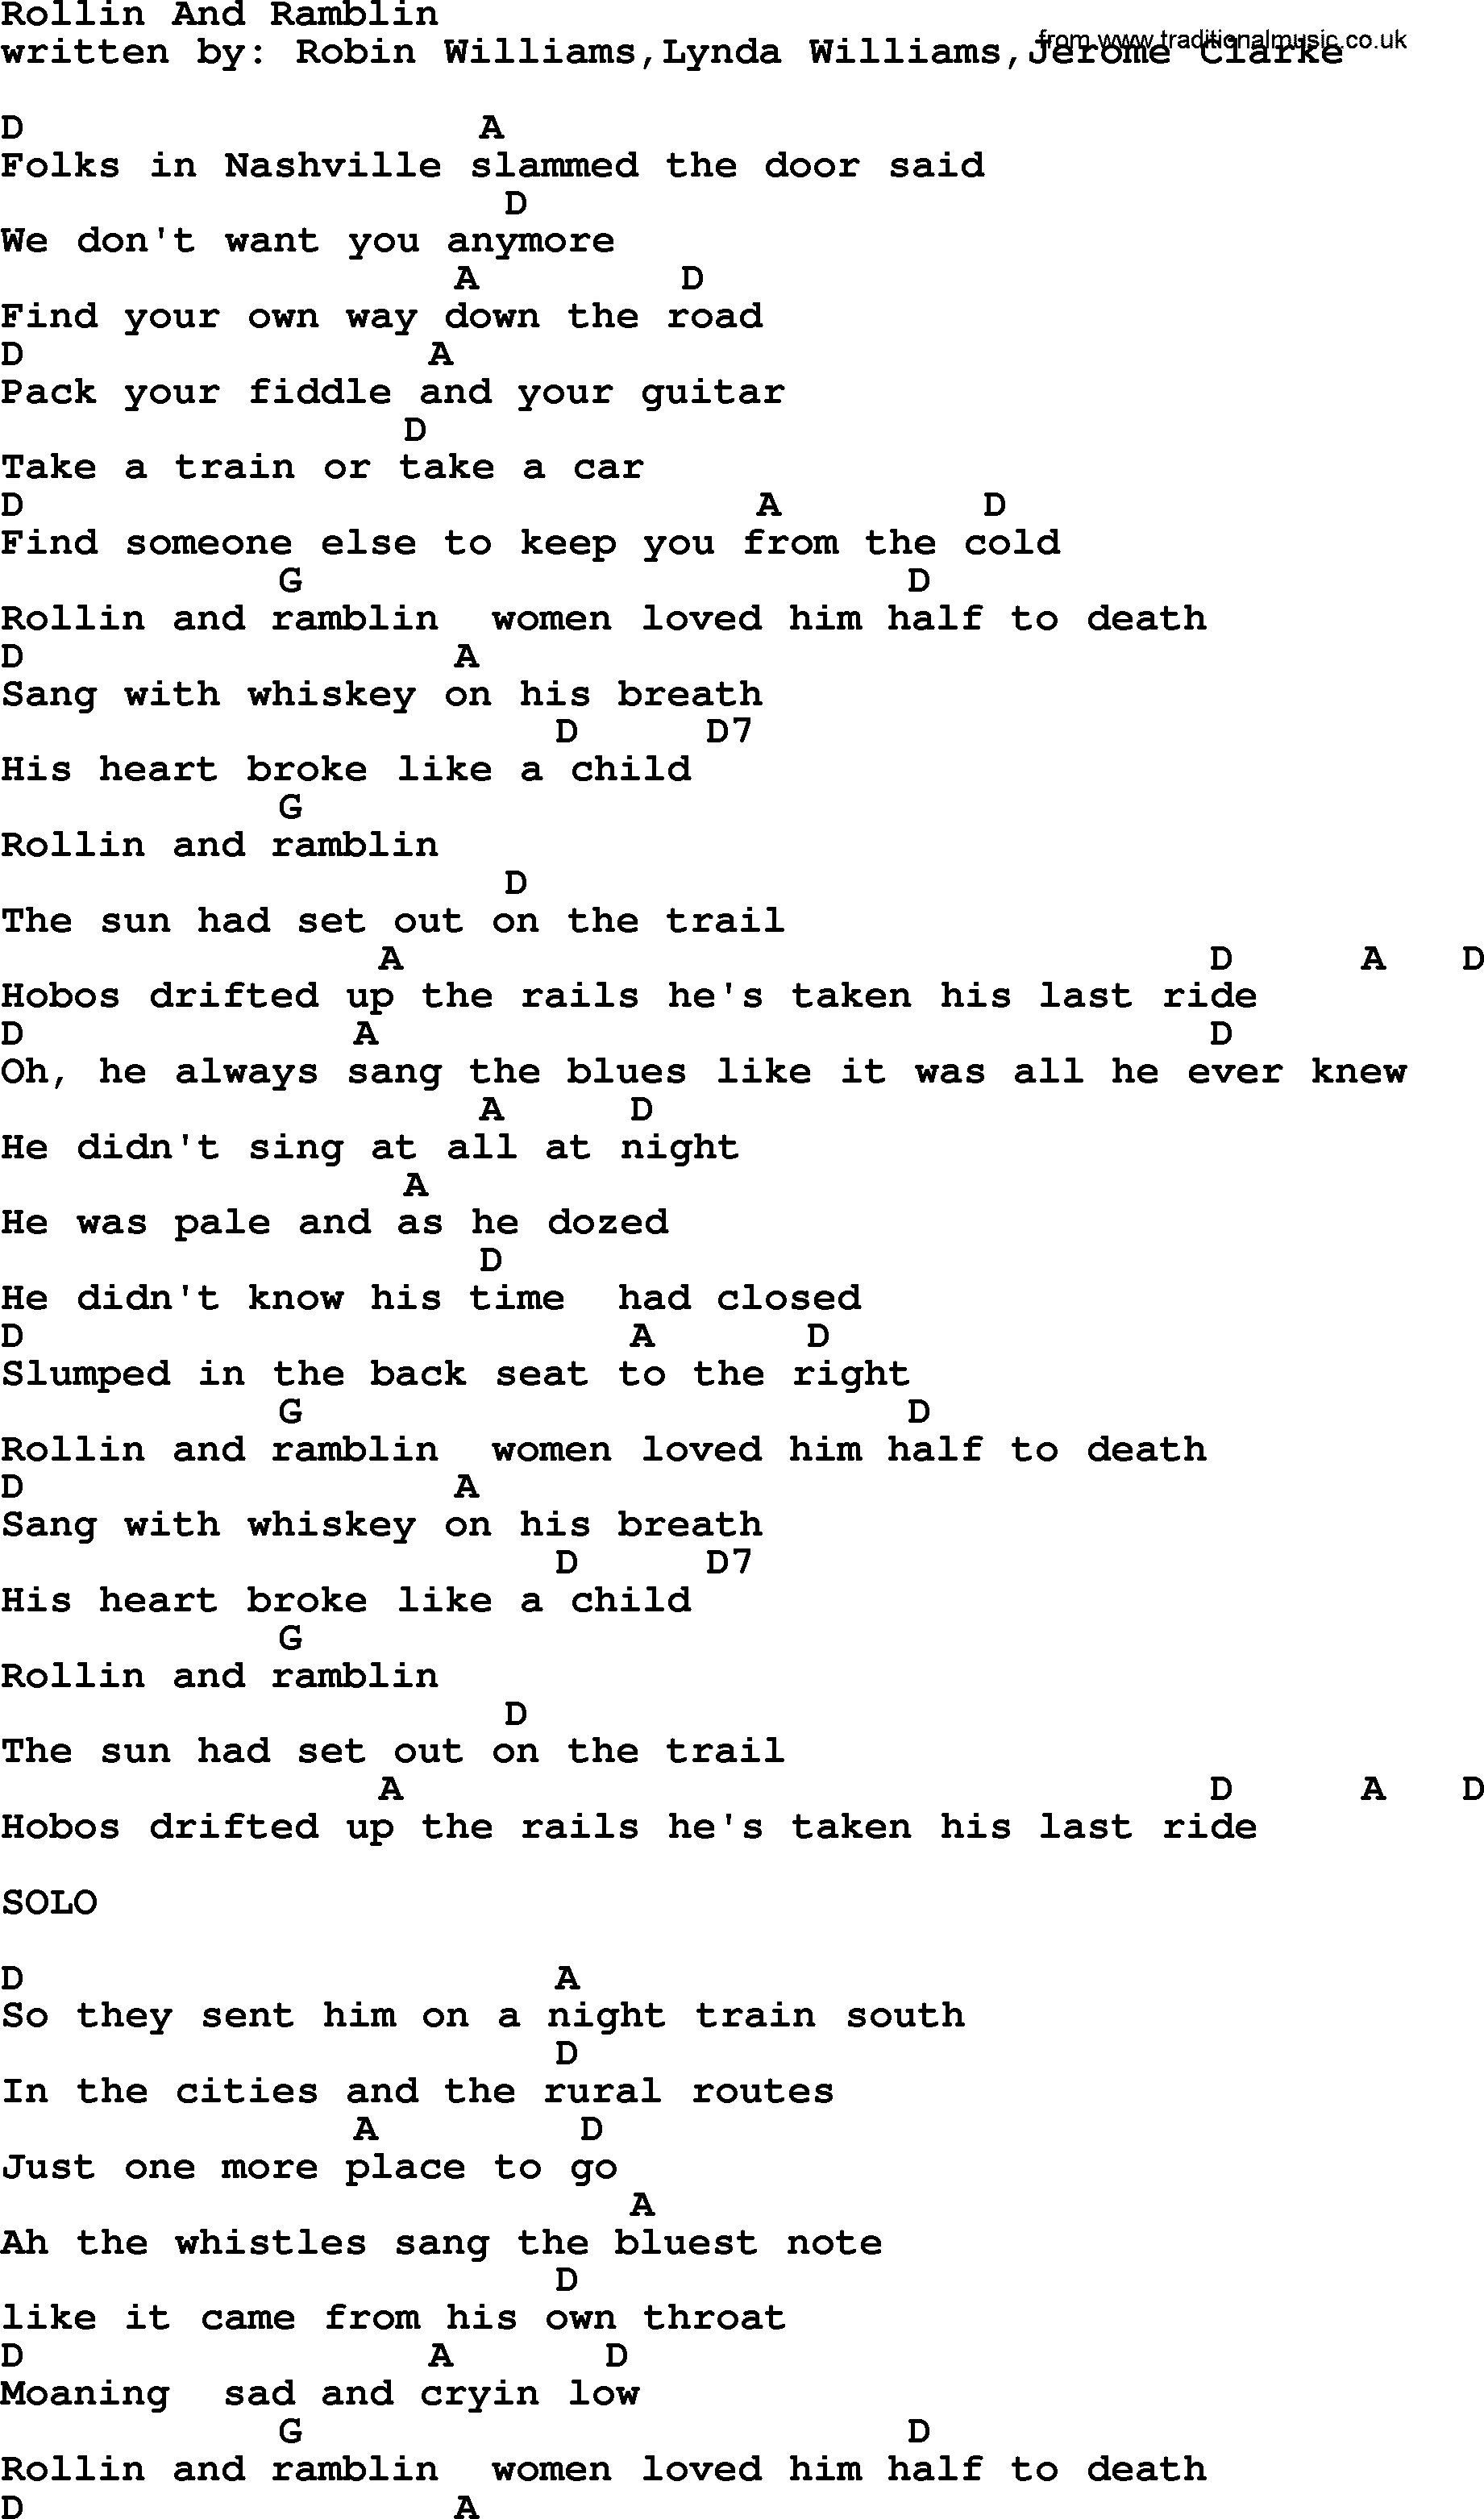 Emmylou Harris song: Rollin And Ramblin lyrics and chords